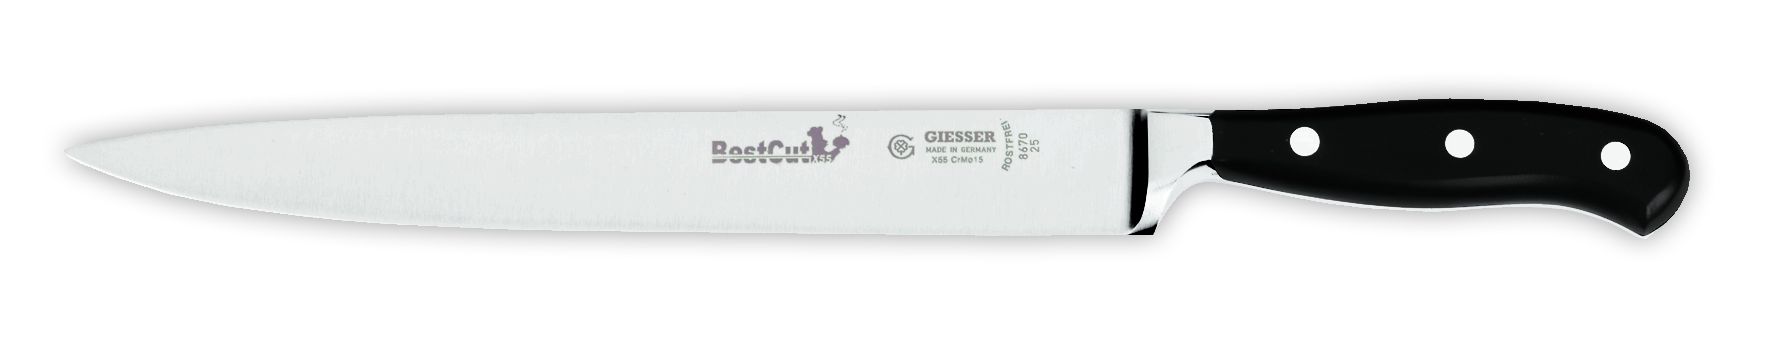 Нож-слайсер BestCut 8670, 15 см,  черная рукоятка